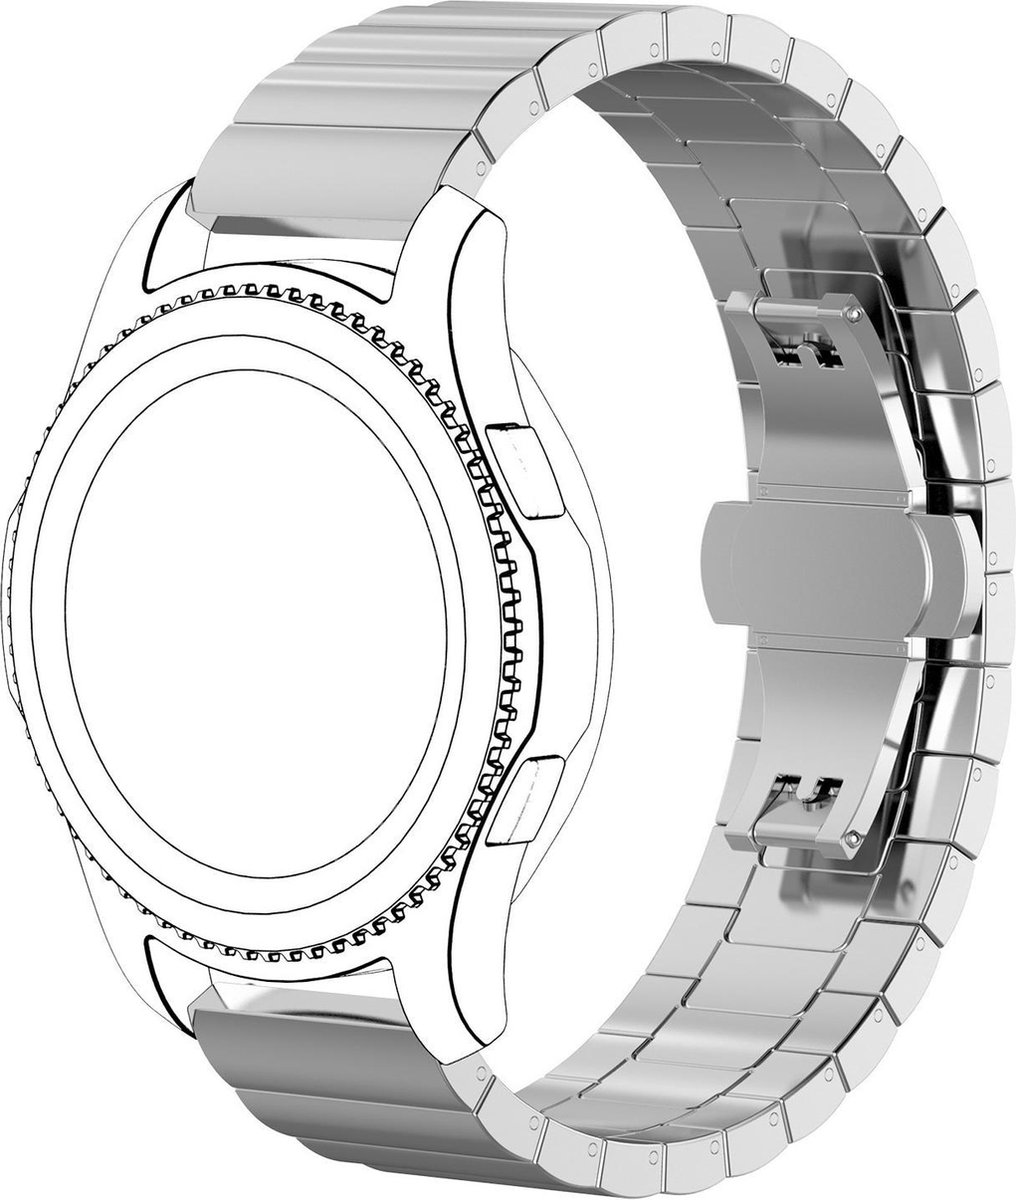 Huawei Watch GT stalen schakel band - zilver - Horlogeband Armband Polsband - Silver